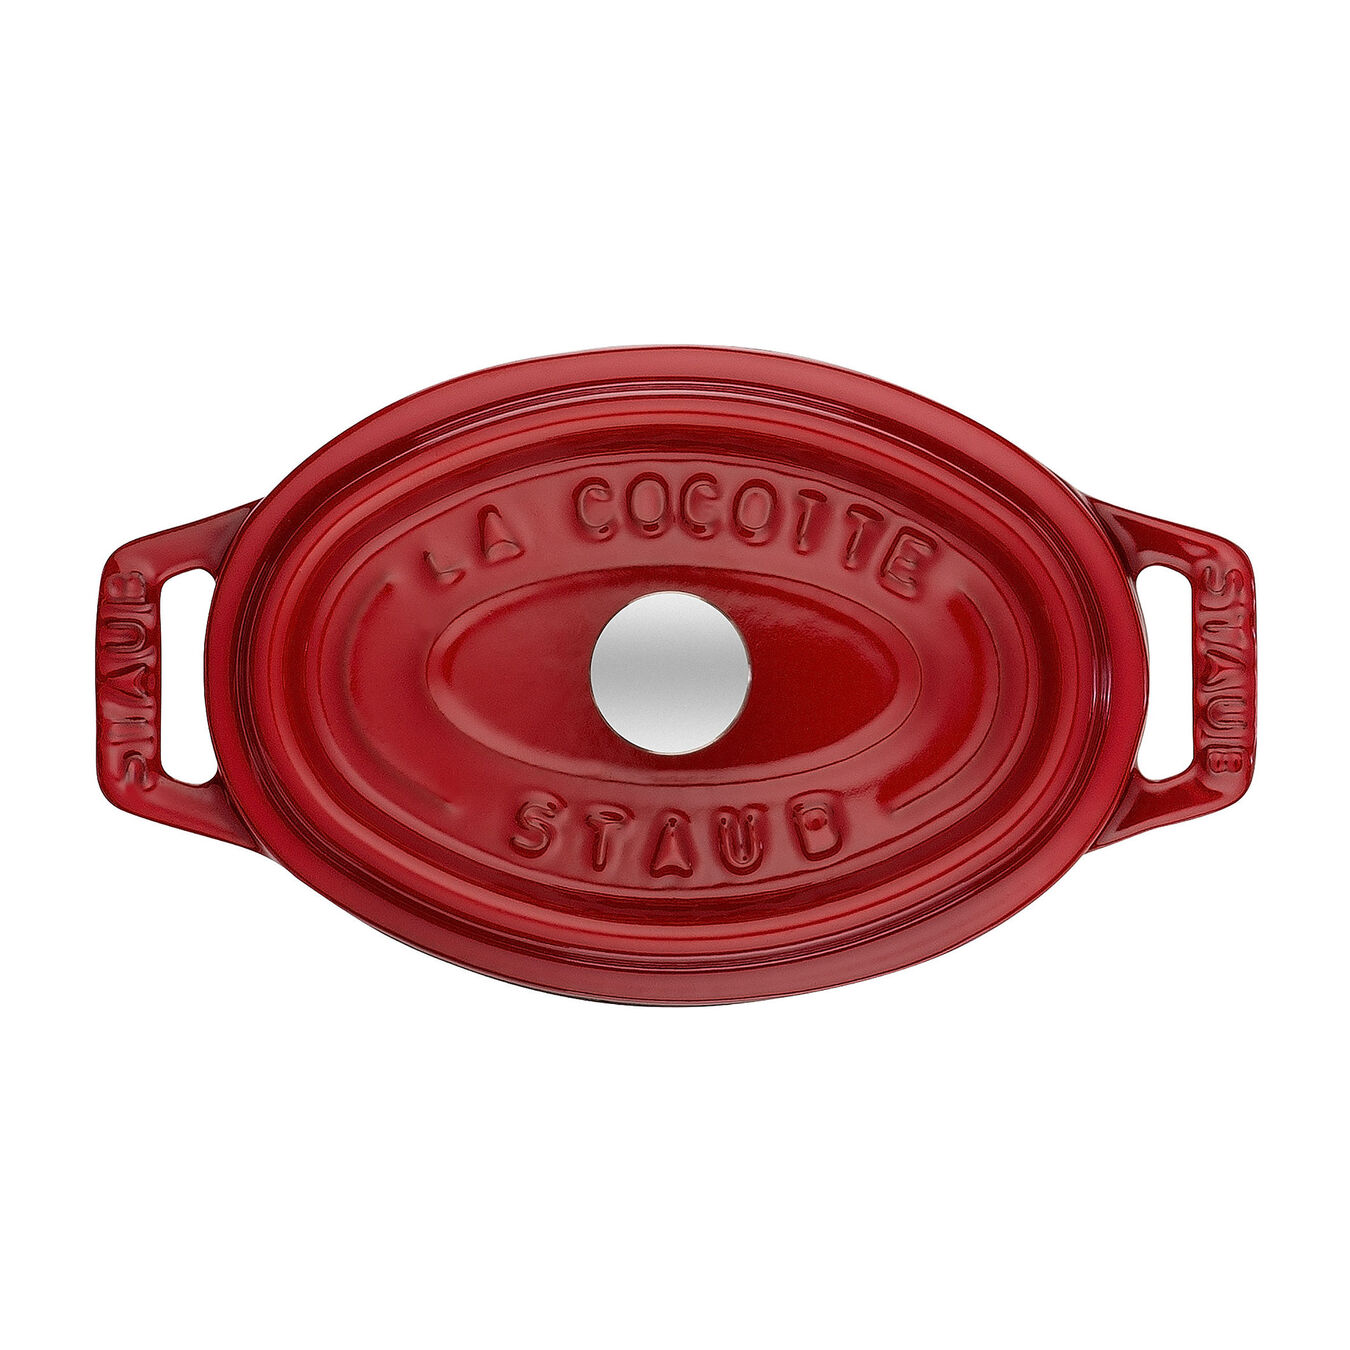 Mini cocotte 11 cm, oval, Vermelho cereja, Ferro fundido,,large 2